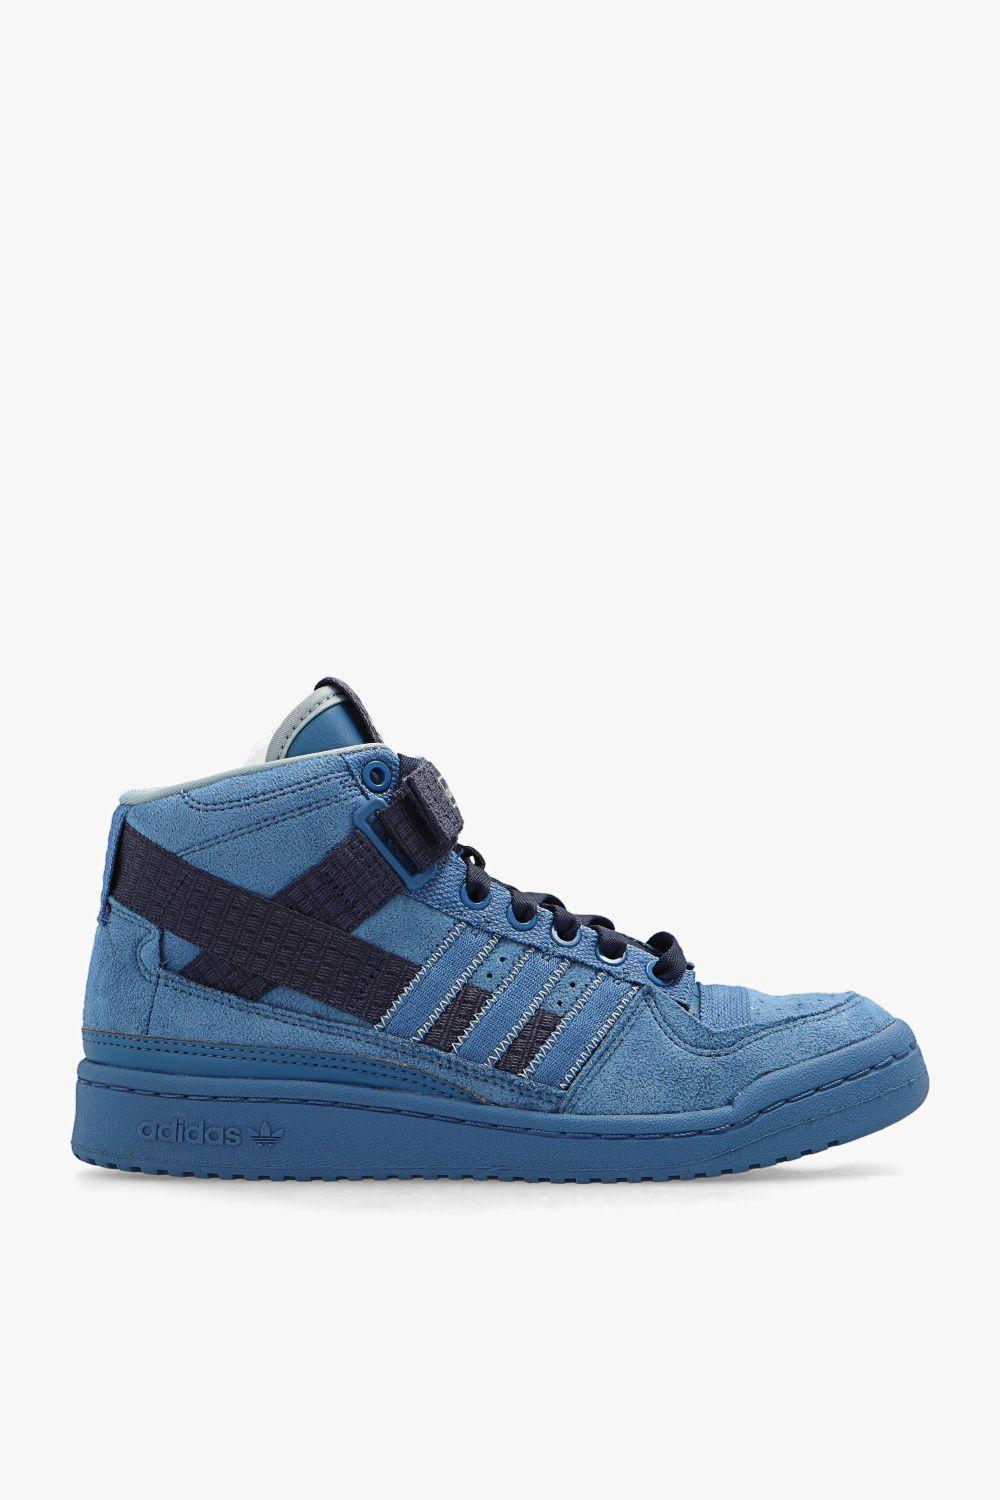 adidas Originals \'forum Mid Parley\' Sneakers in Blue | Lyst